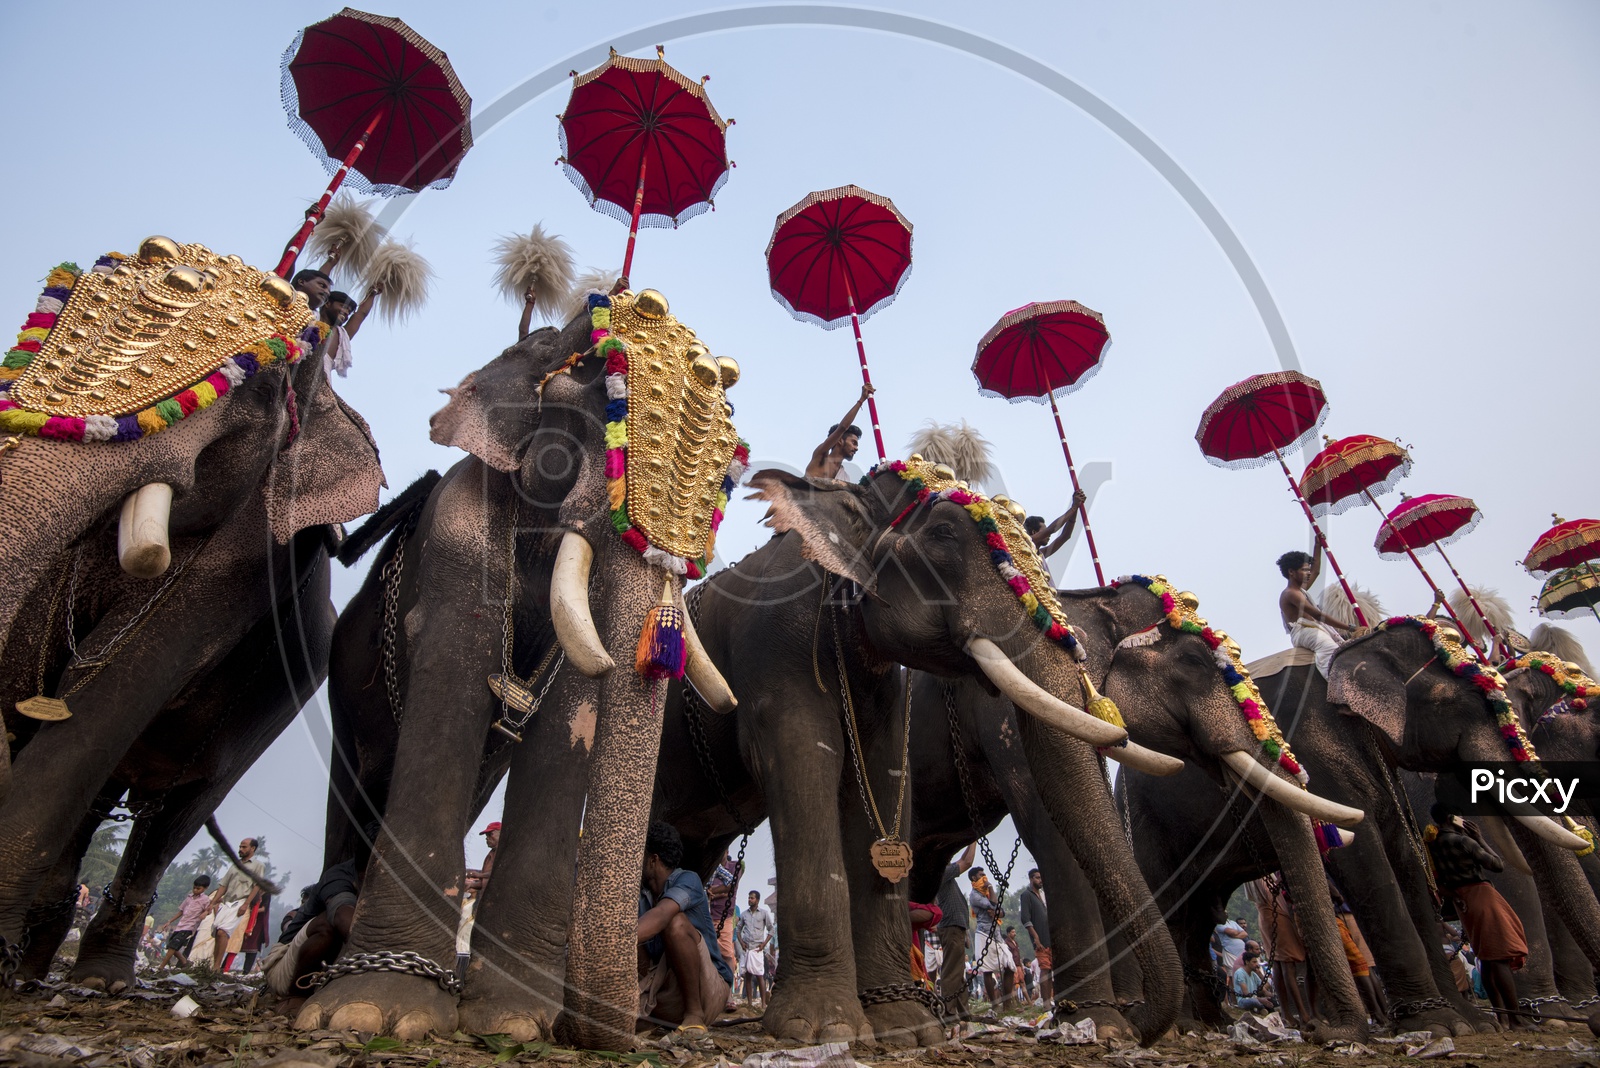 Elephants in Arattupuzha Pooram Festival